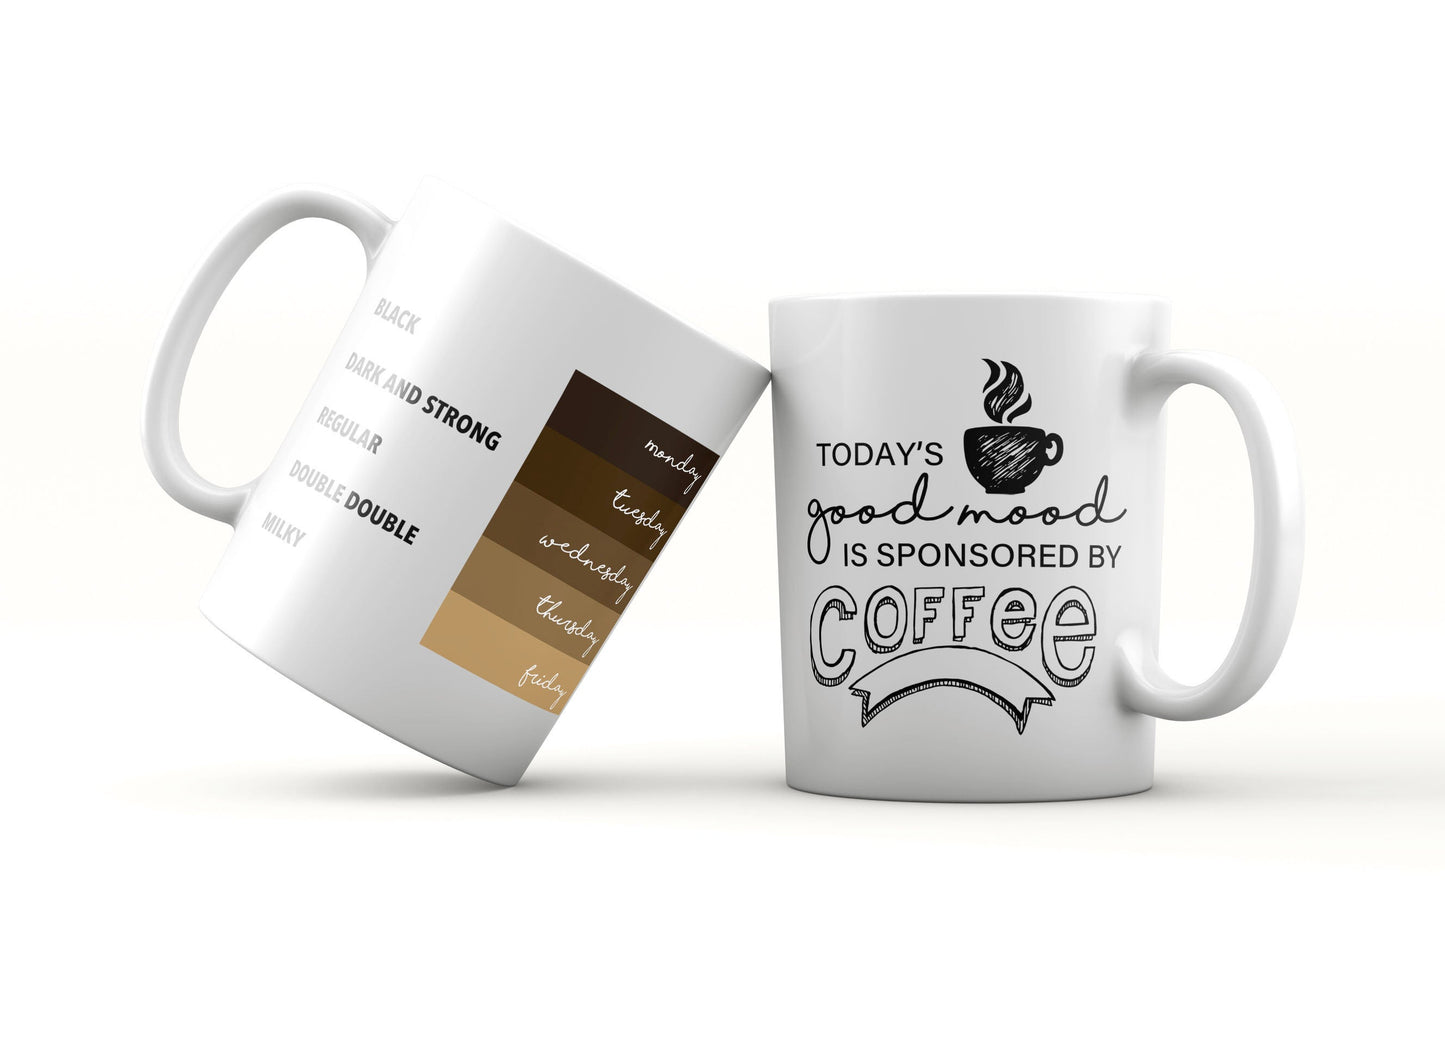 Funny Mug for Dad - Sorry Dad Gift Ideas -Personalized Gifts for Dad Coffee Mug - Dad Gift Birthday Mug - Busybee Creates